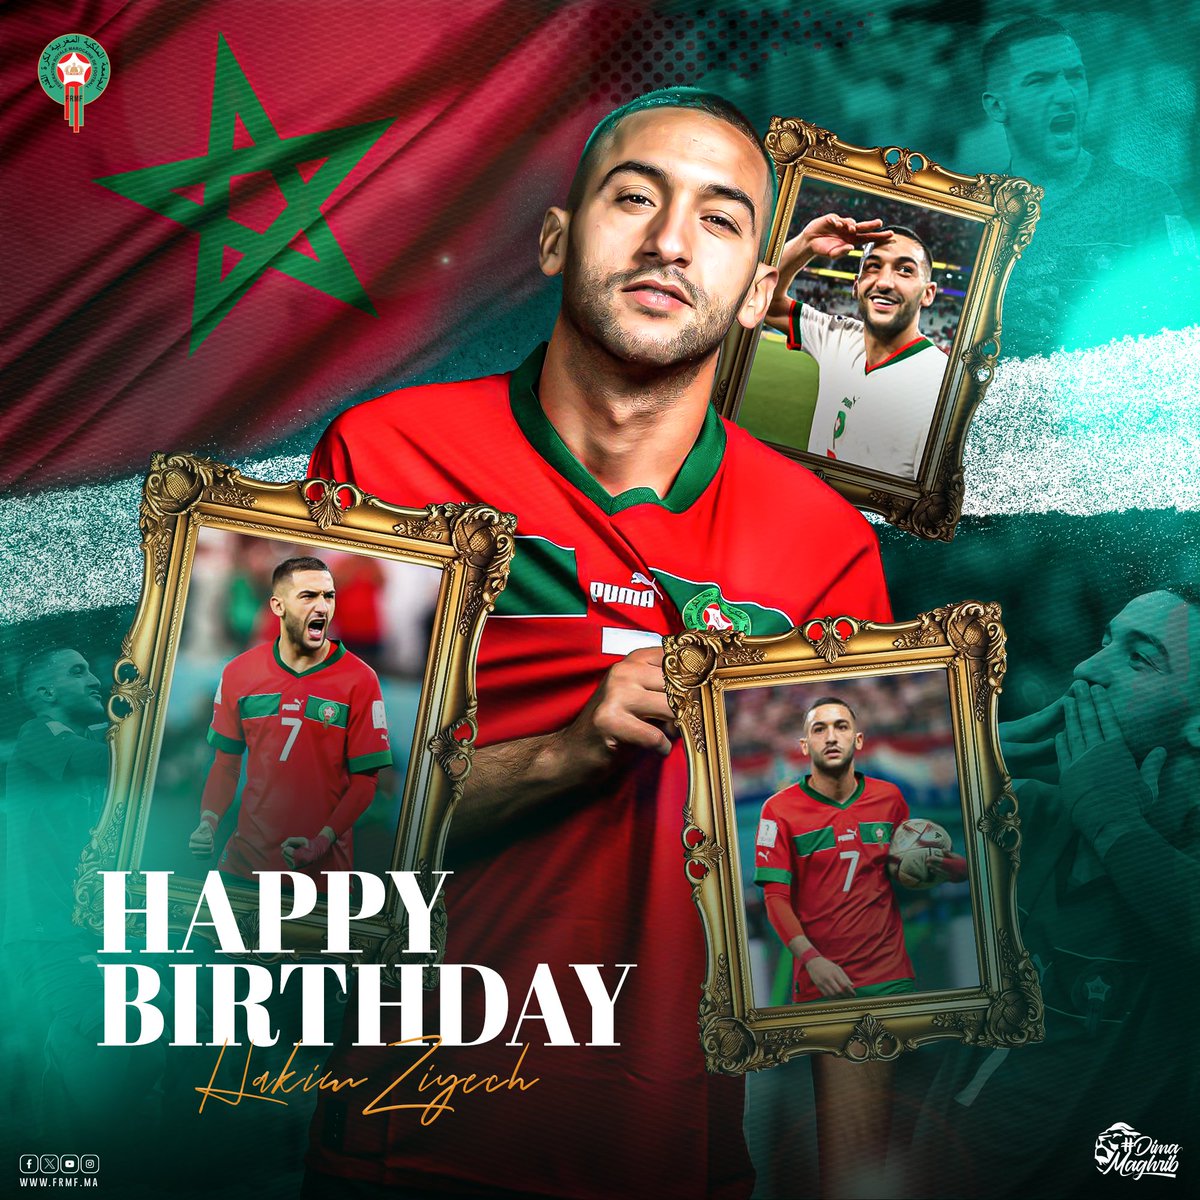 عيد ميلاد سعيد حكيم زياش 🧙🏻‍♂️ Happy birthday Hakim Ziyech 🥳 We wish you all the best #DimaMaghrib 🇲🇦